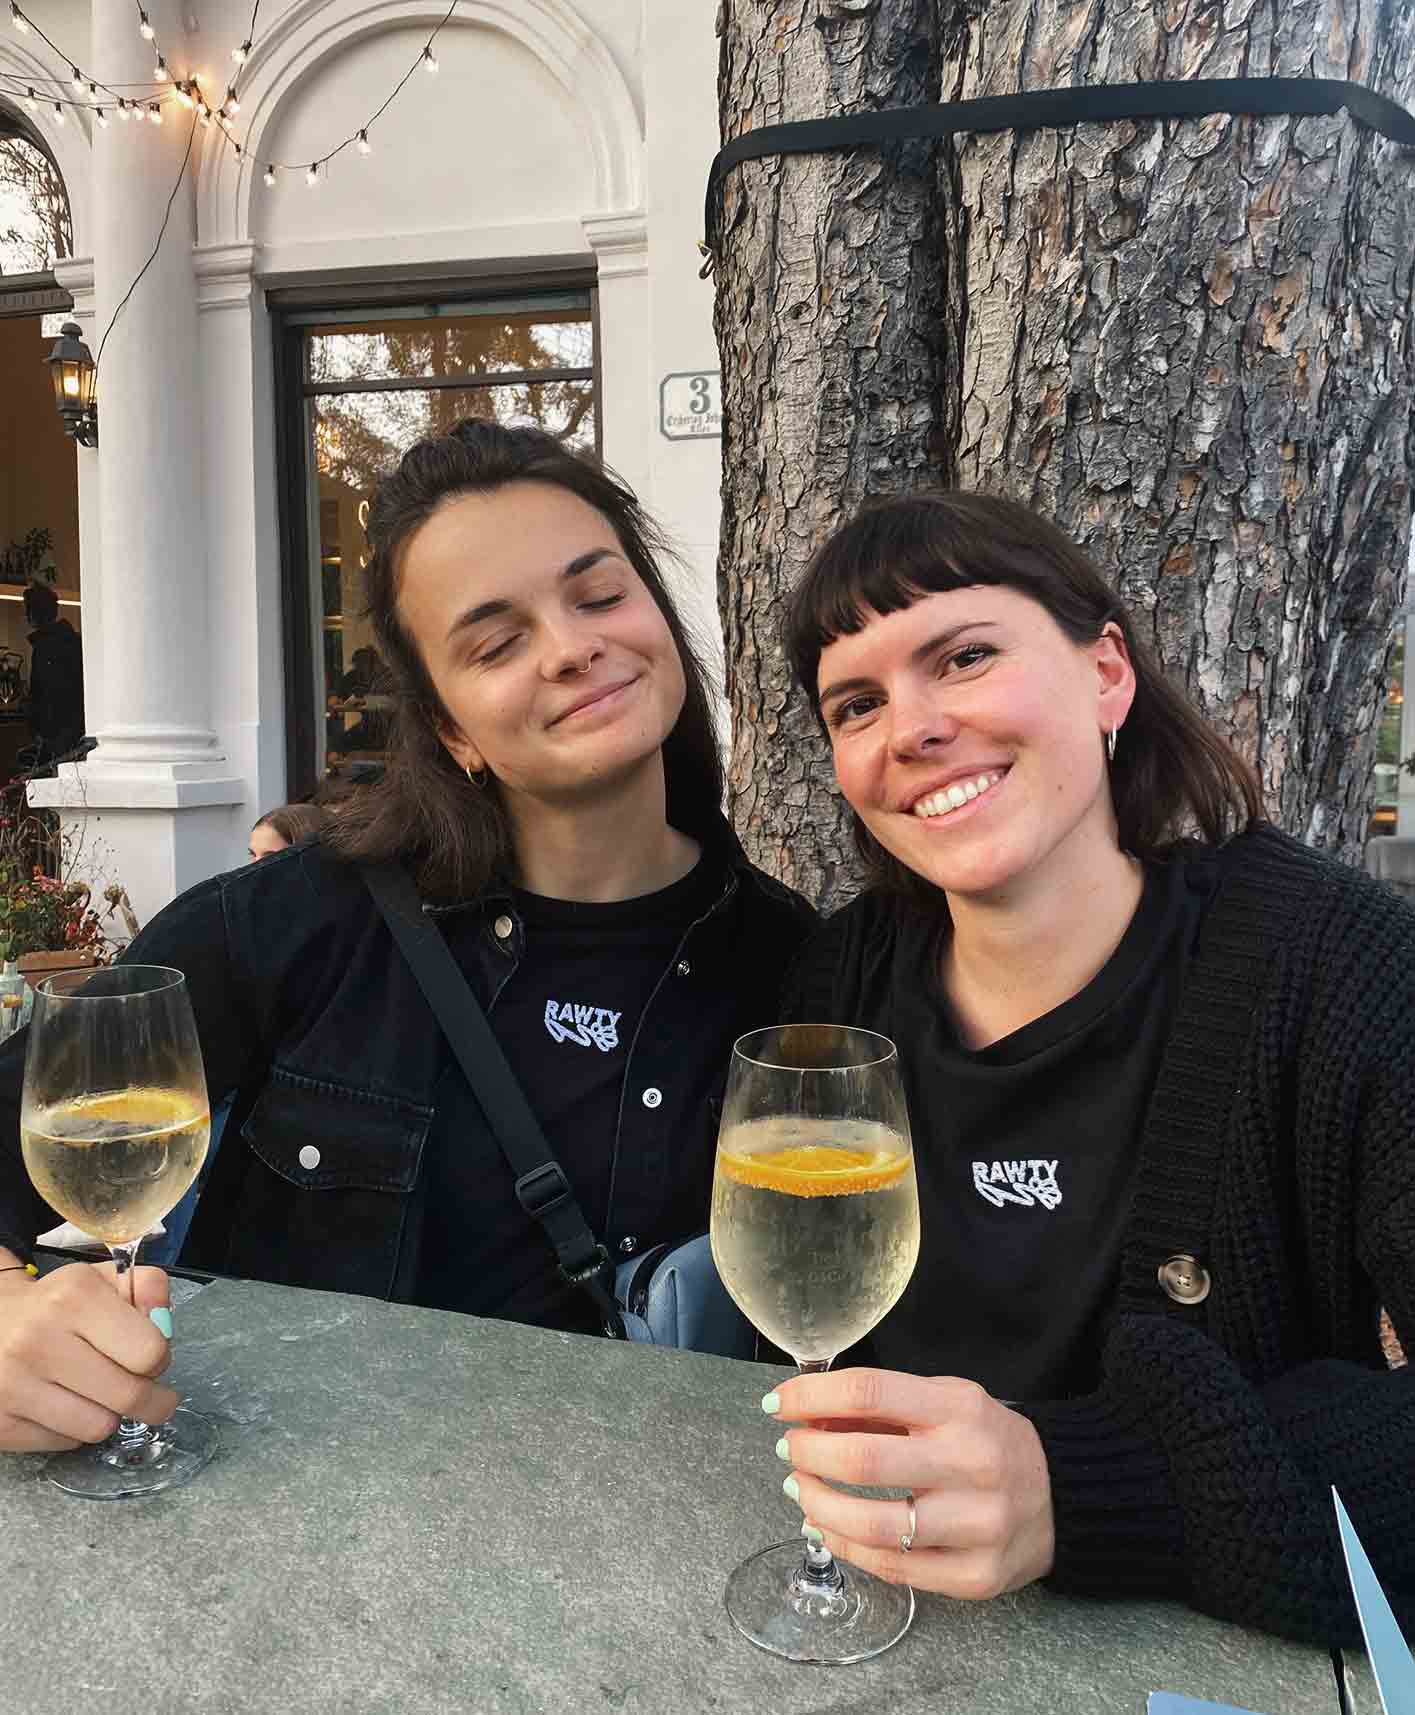 Sophia Stöhr and Tessa Huber sitting outside having a drink, smiling and wearing black RAWTY t-shirts.